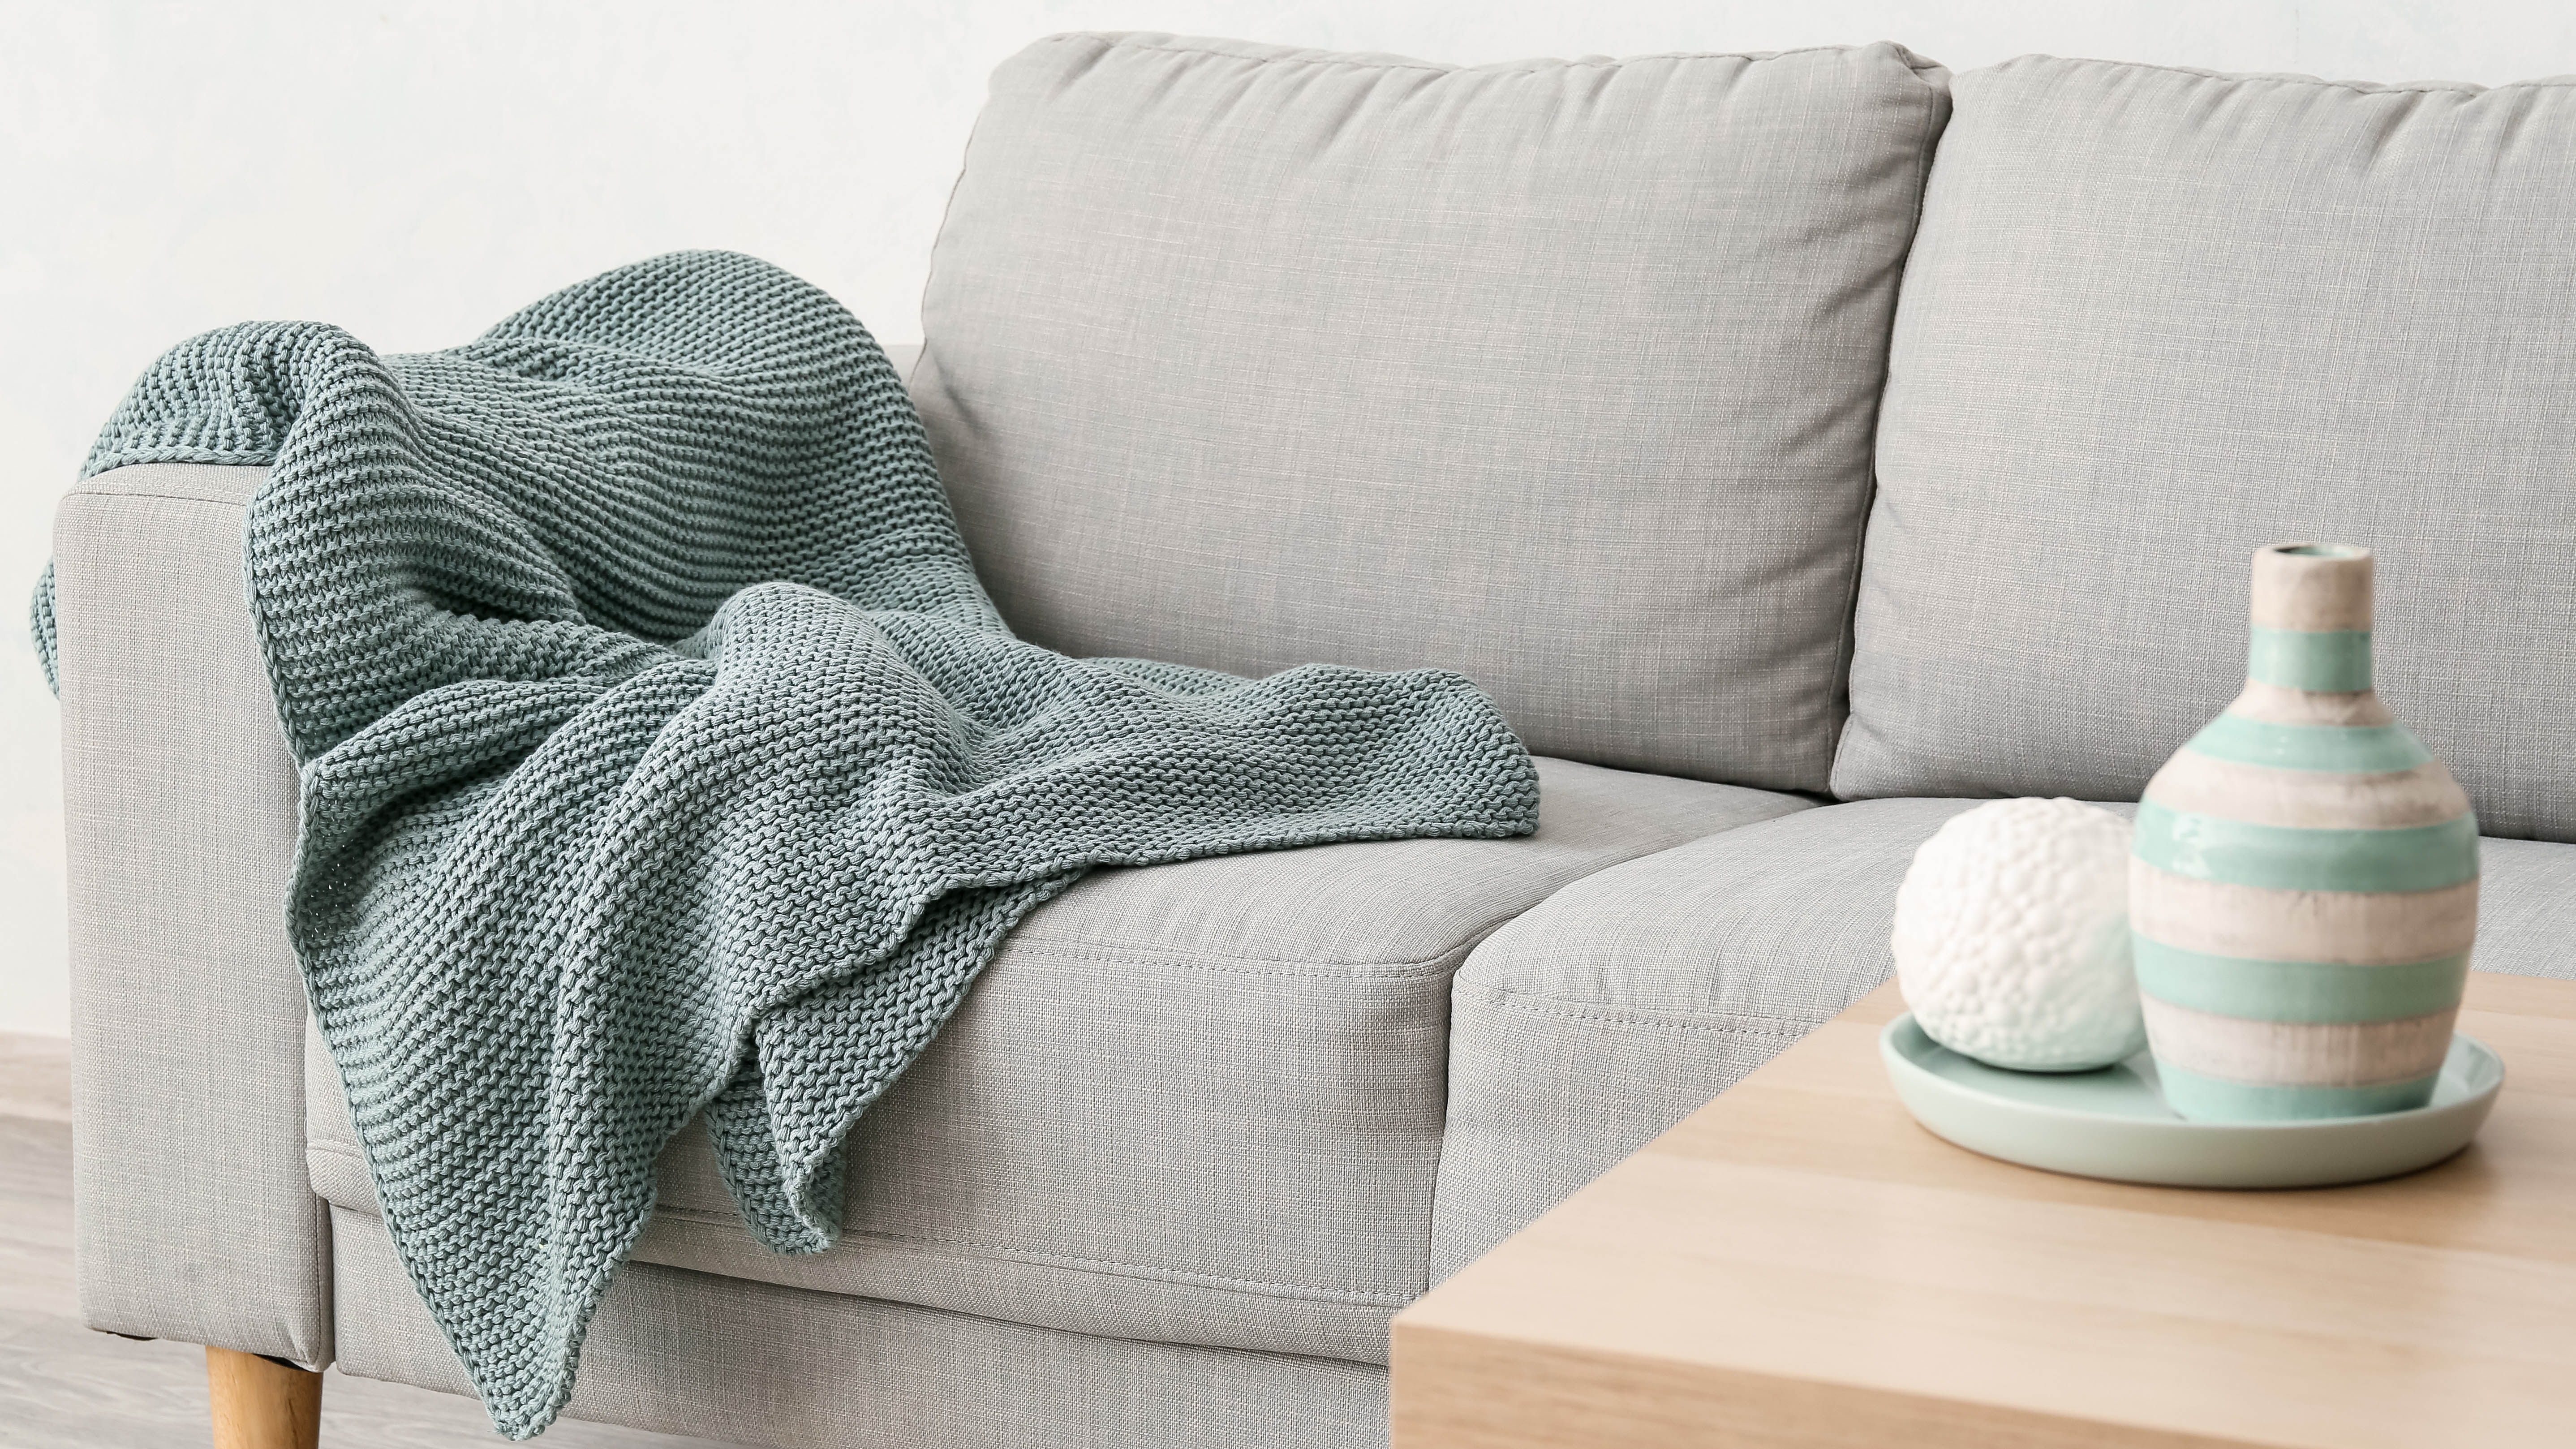 Gray blanket on the sofa